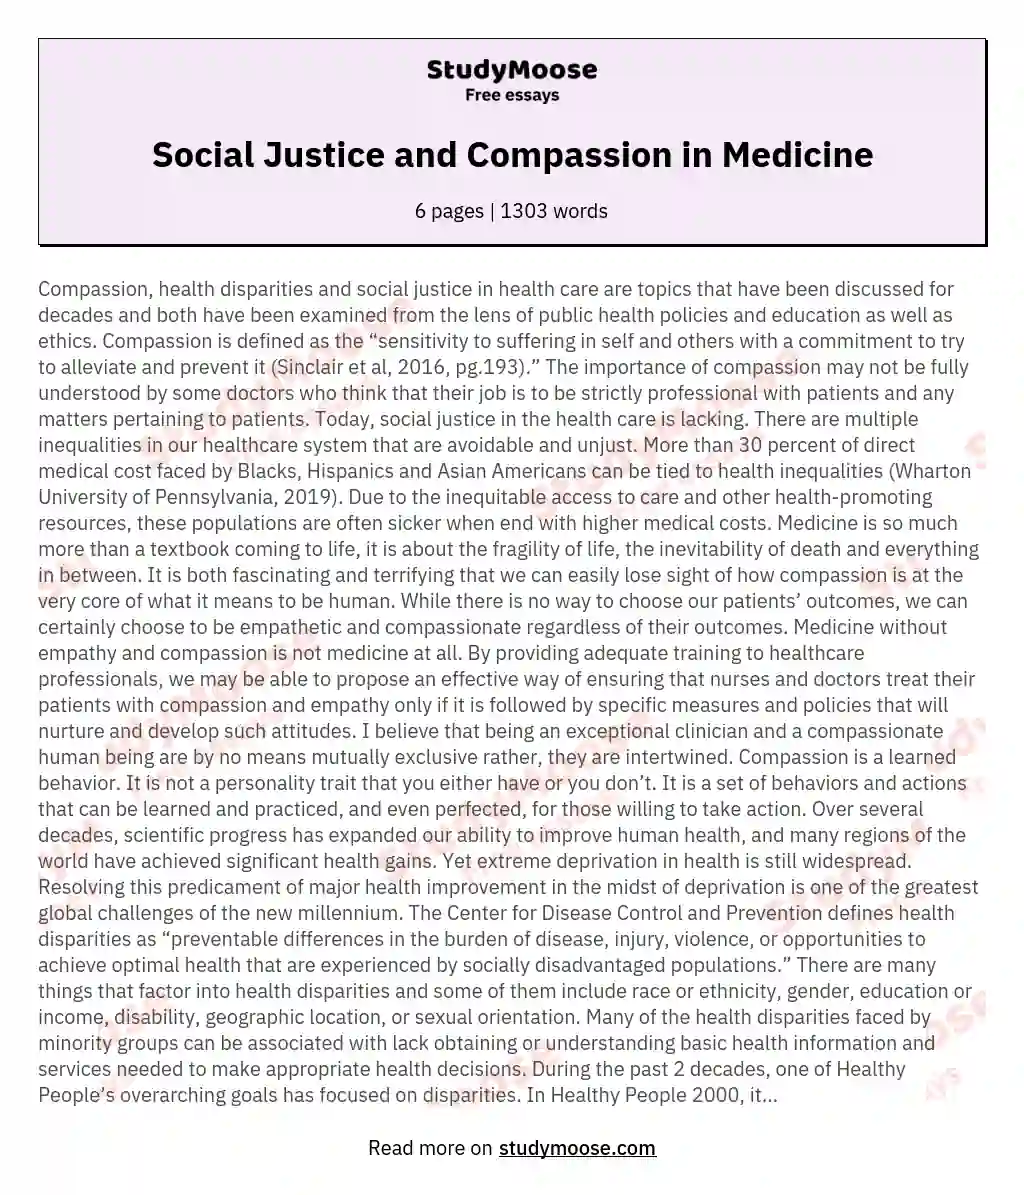 Social Justice and Compassion in Medicine essay